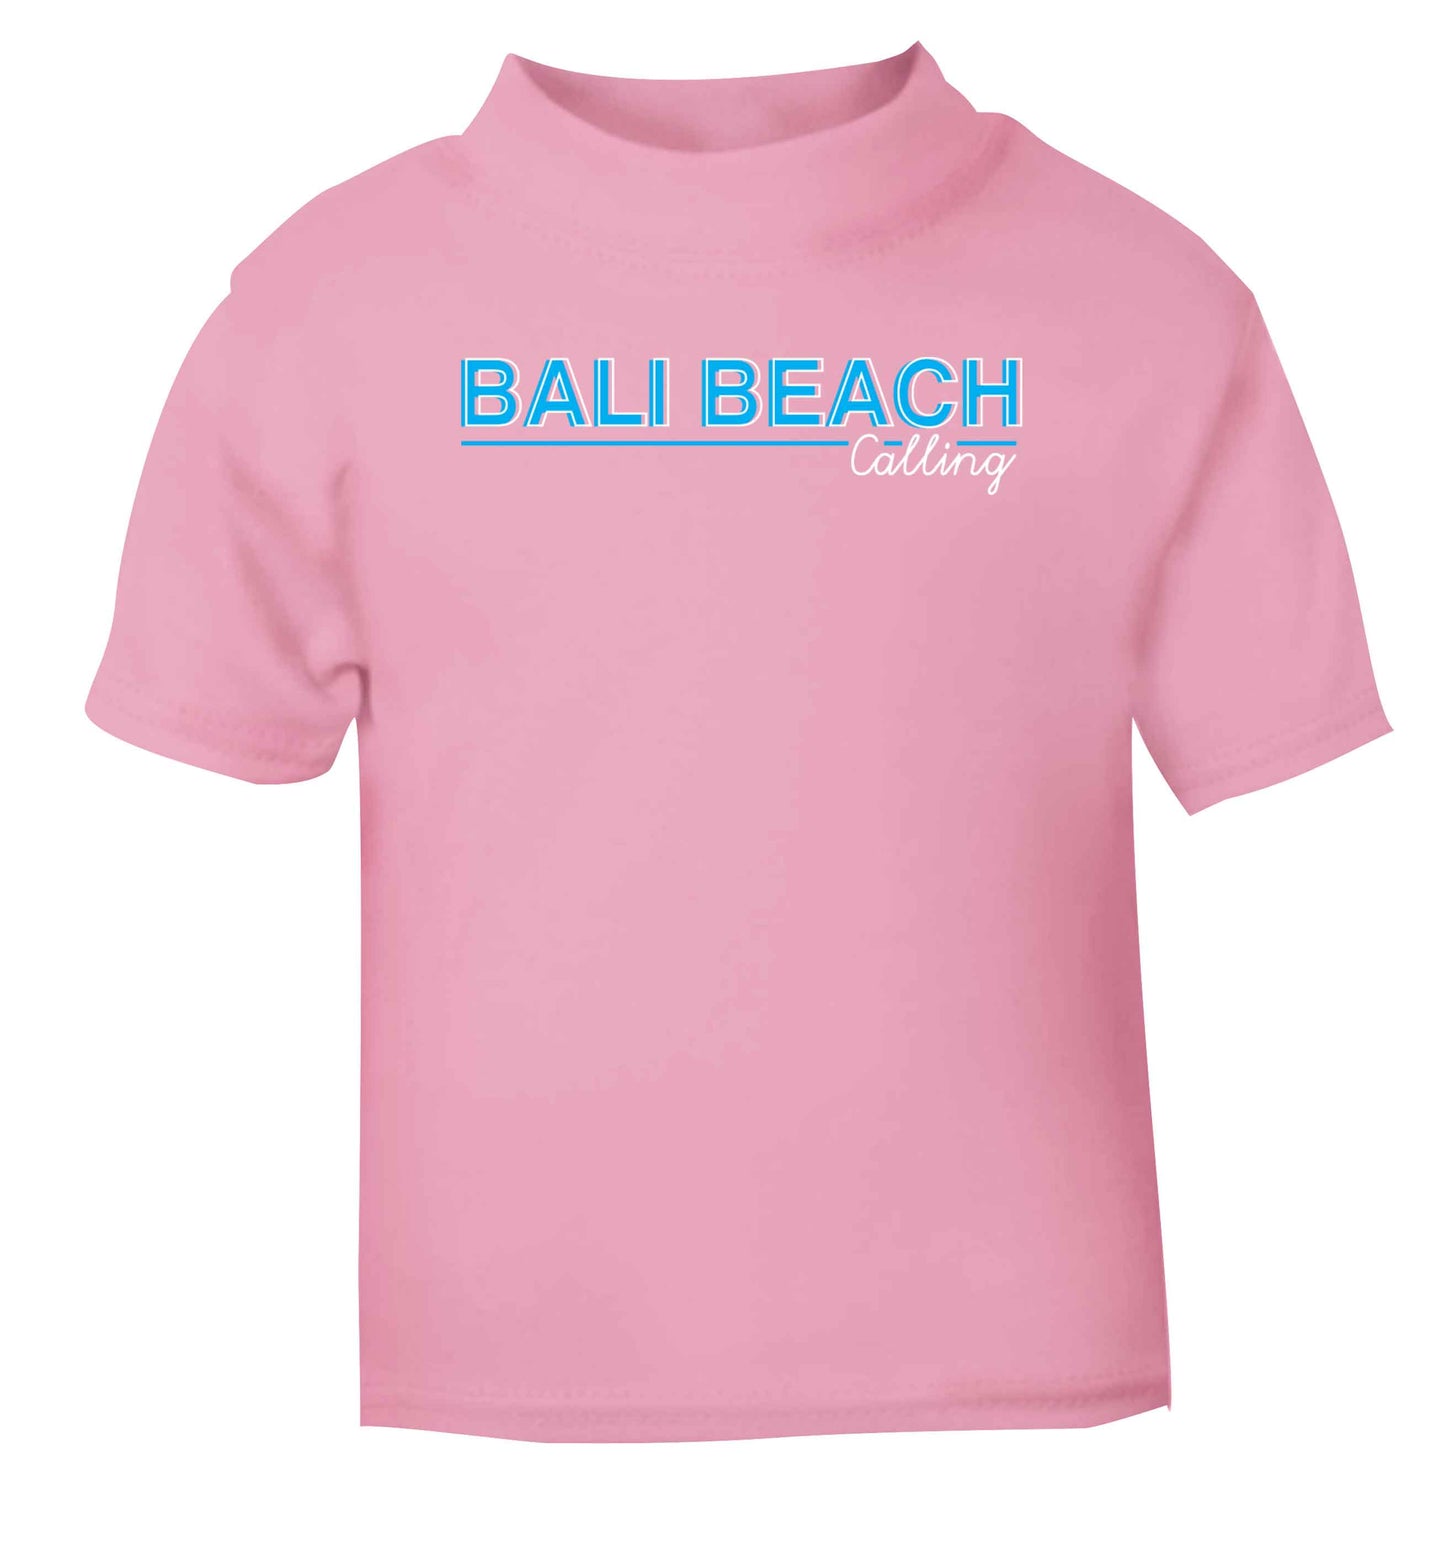 Bali beach calling light pink Baby Toddler Tshirt 2 Years